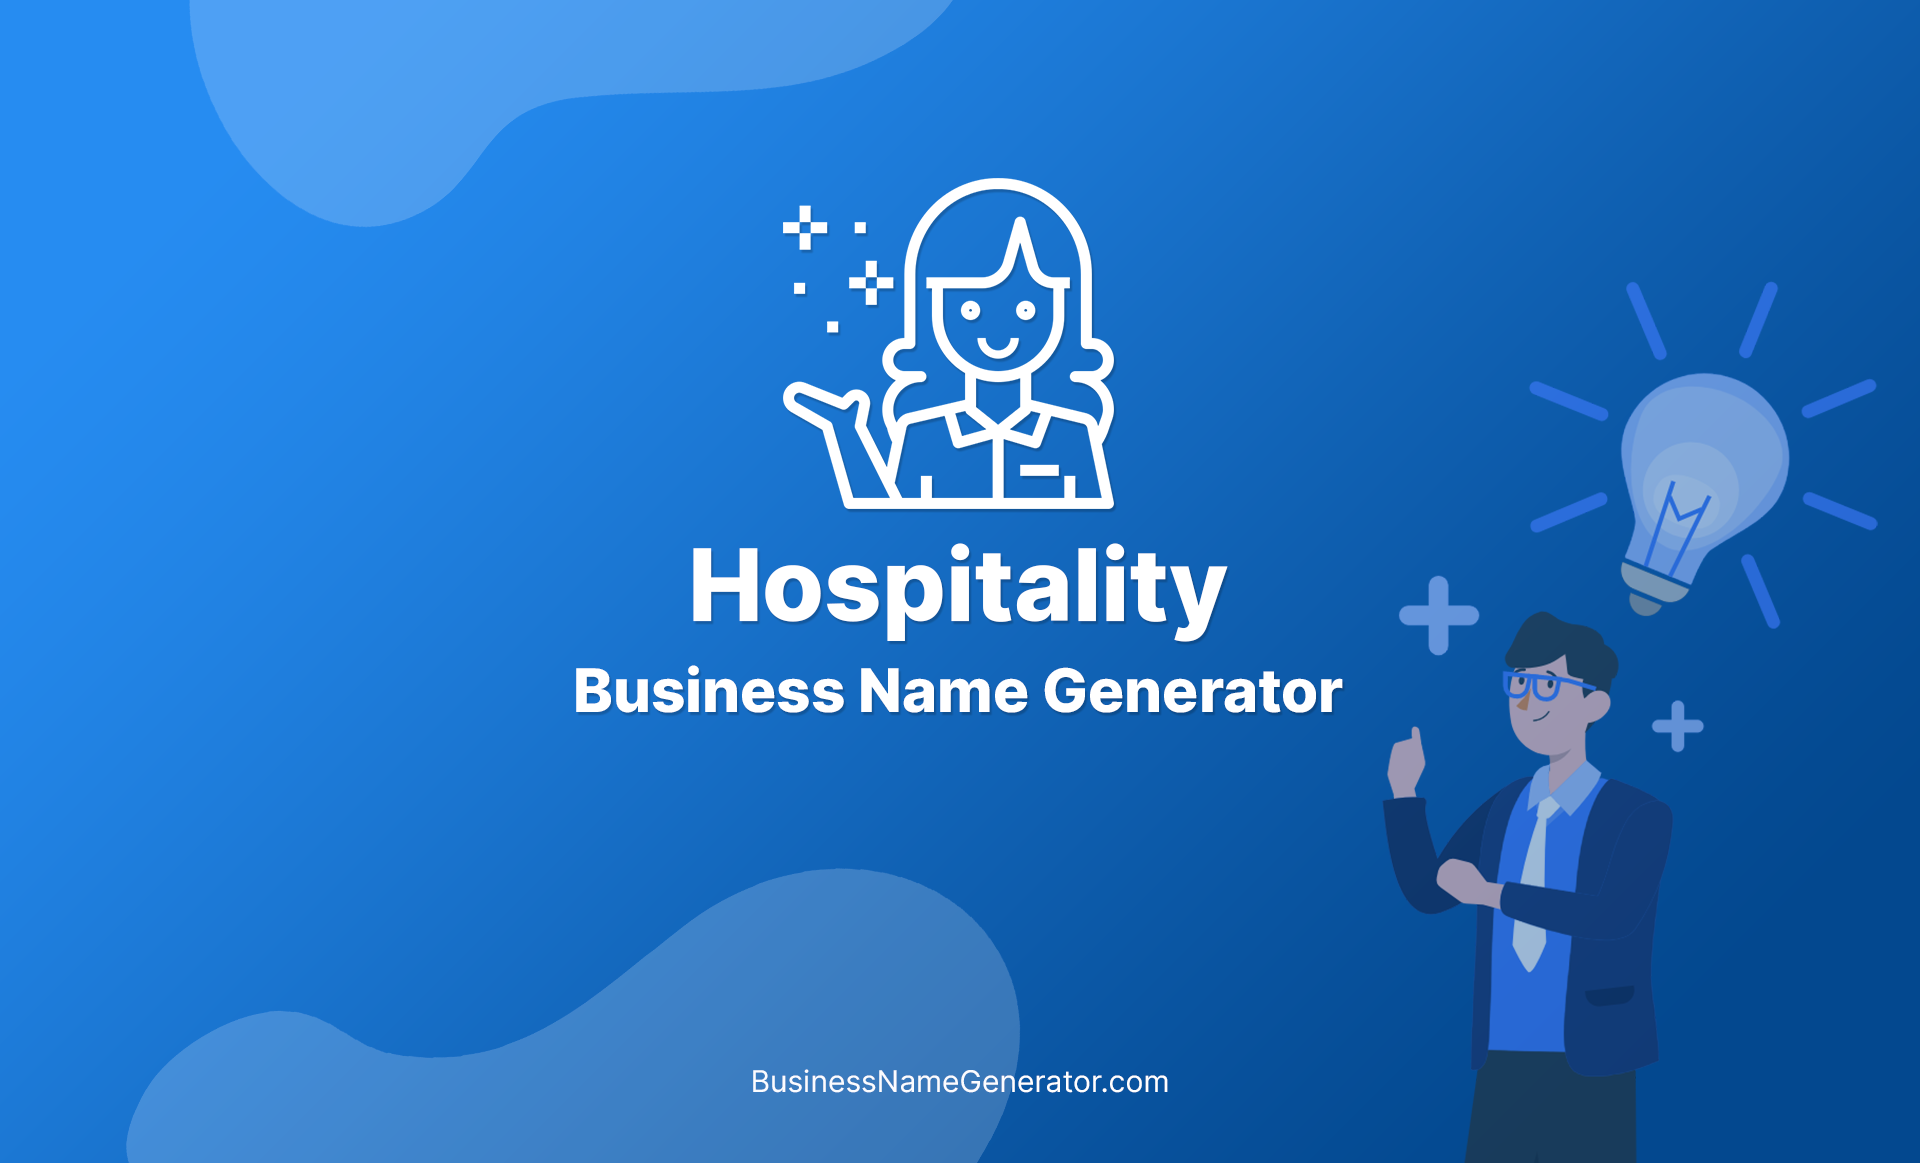 Hospitality Business Name Generator